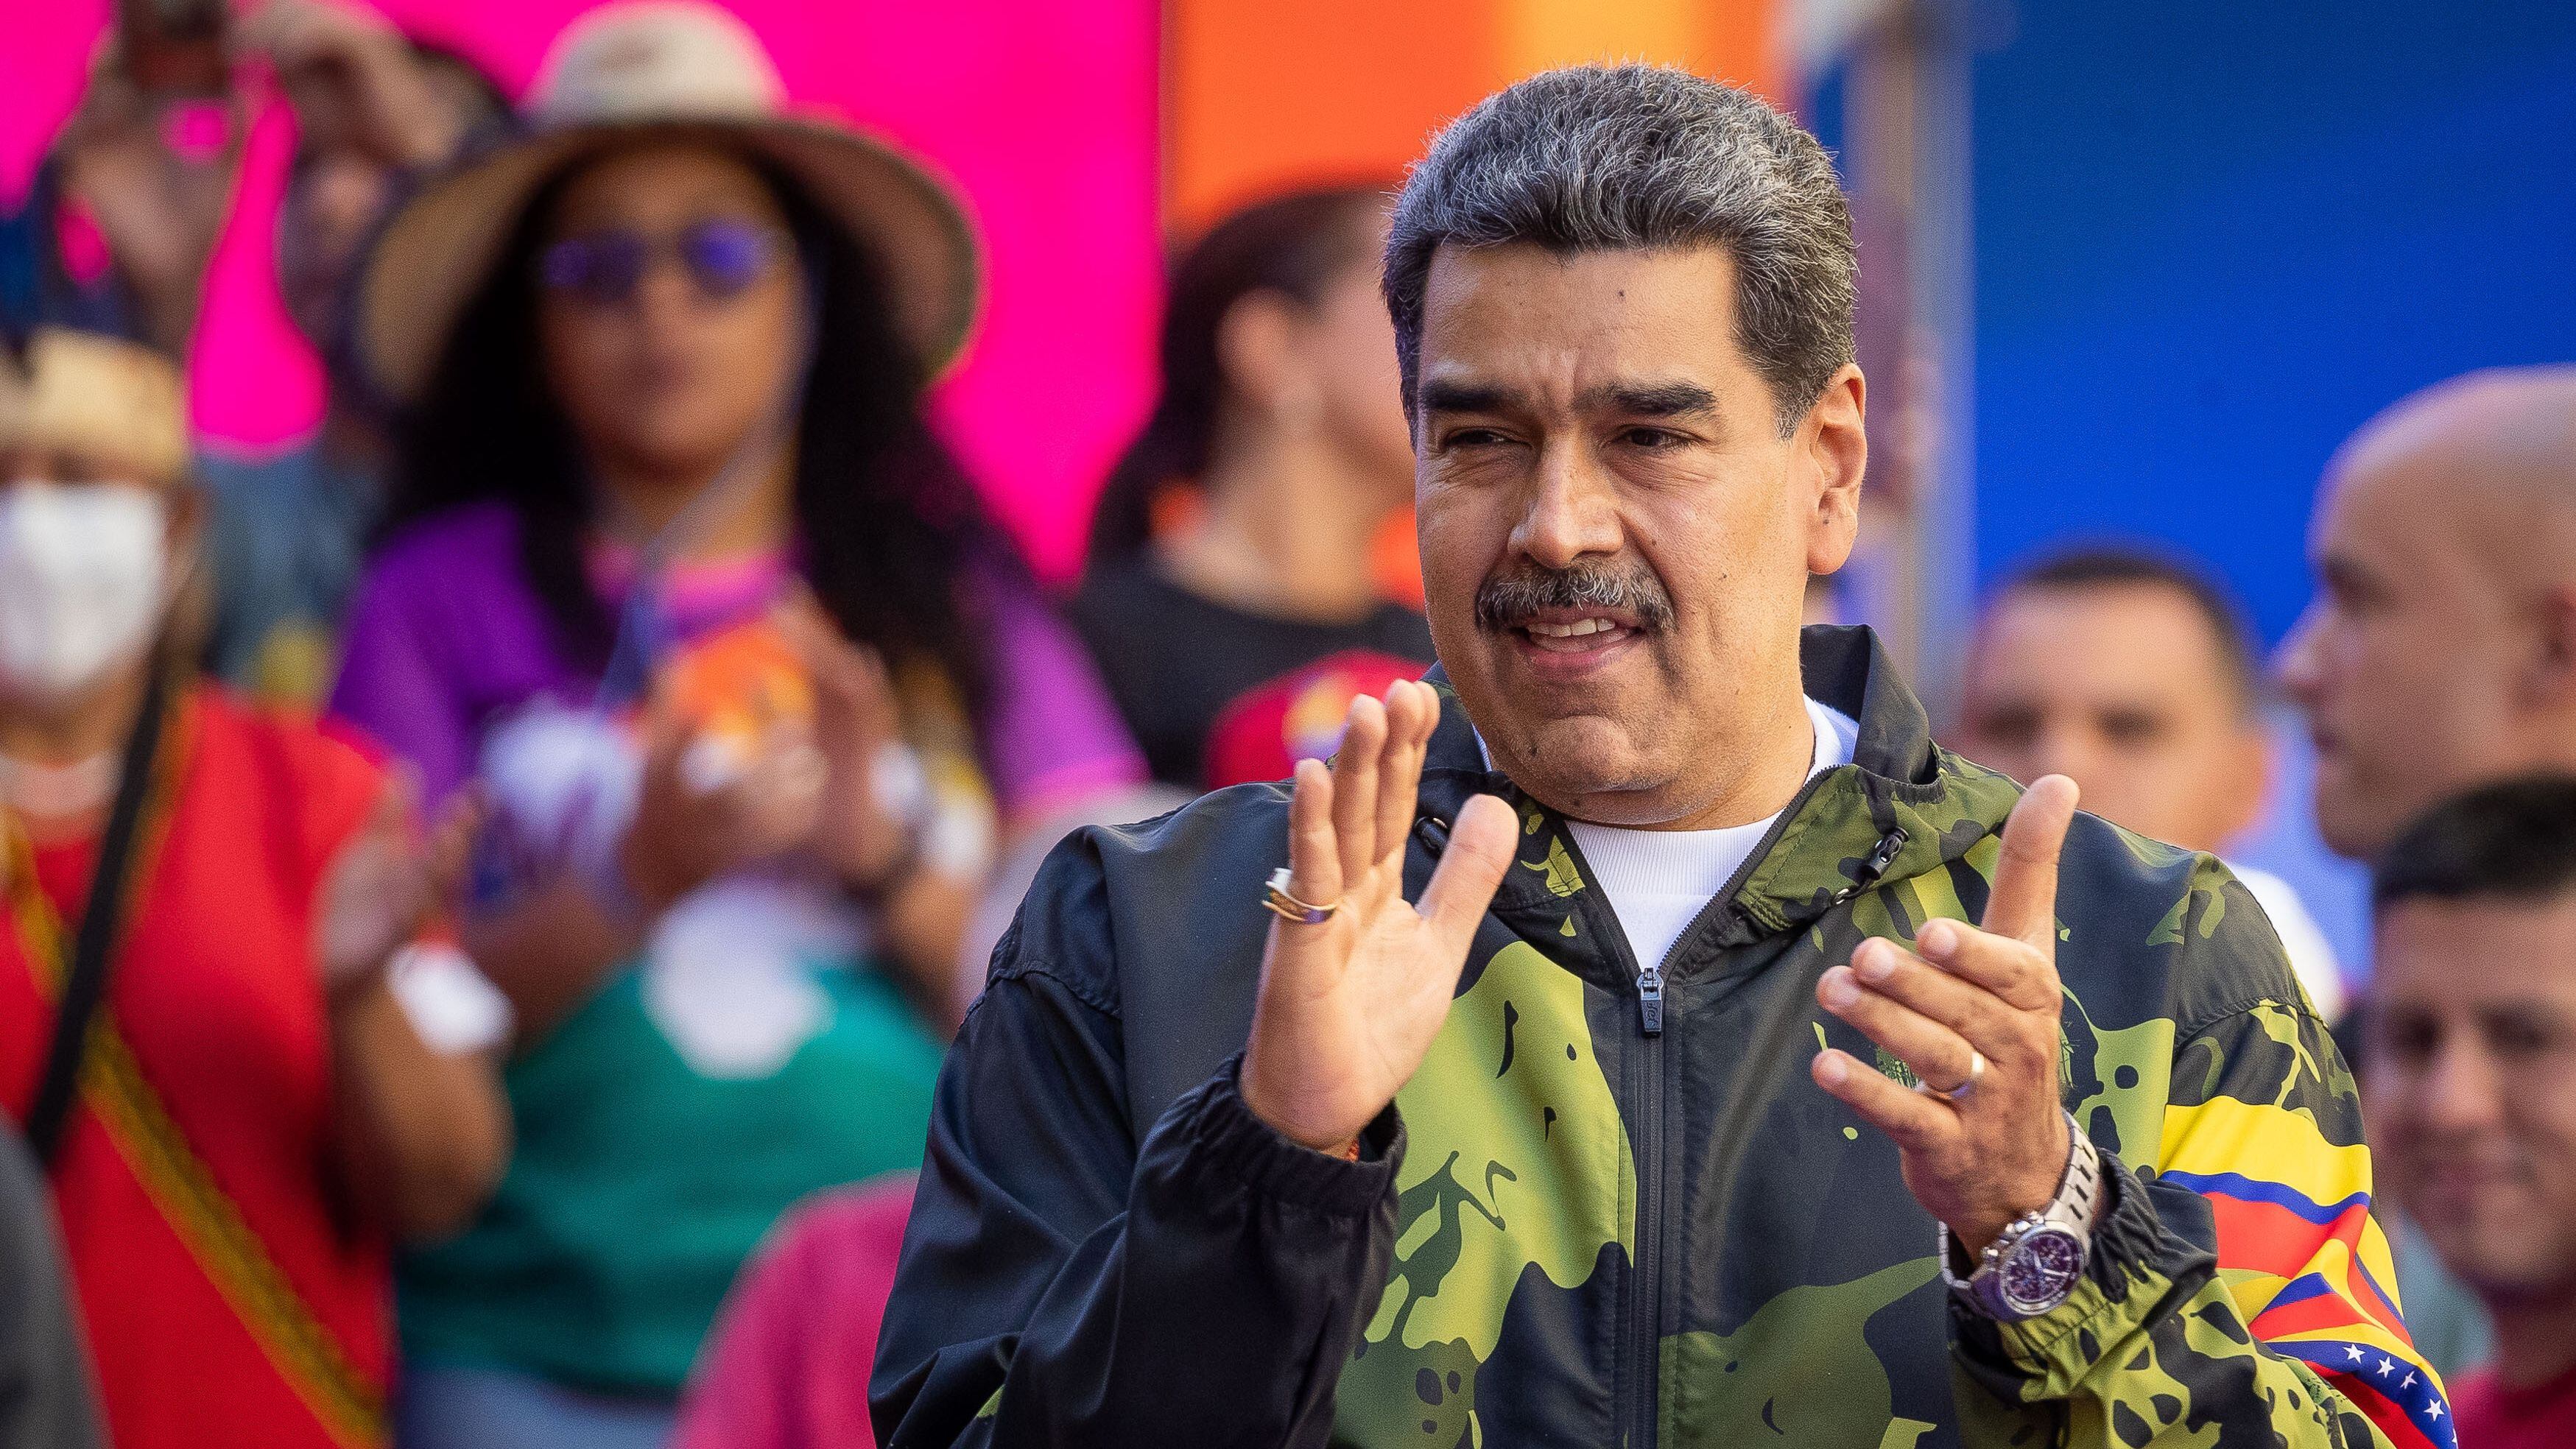 Nicolás Maduro (EFE)